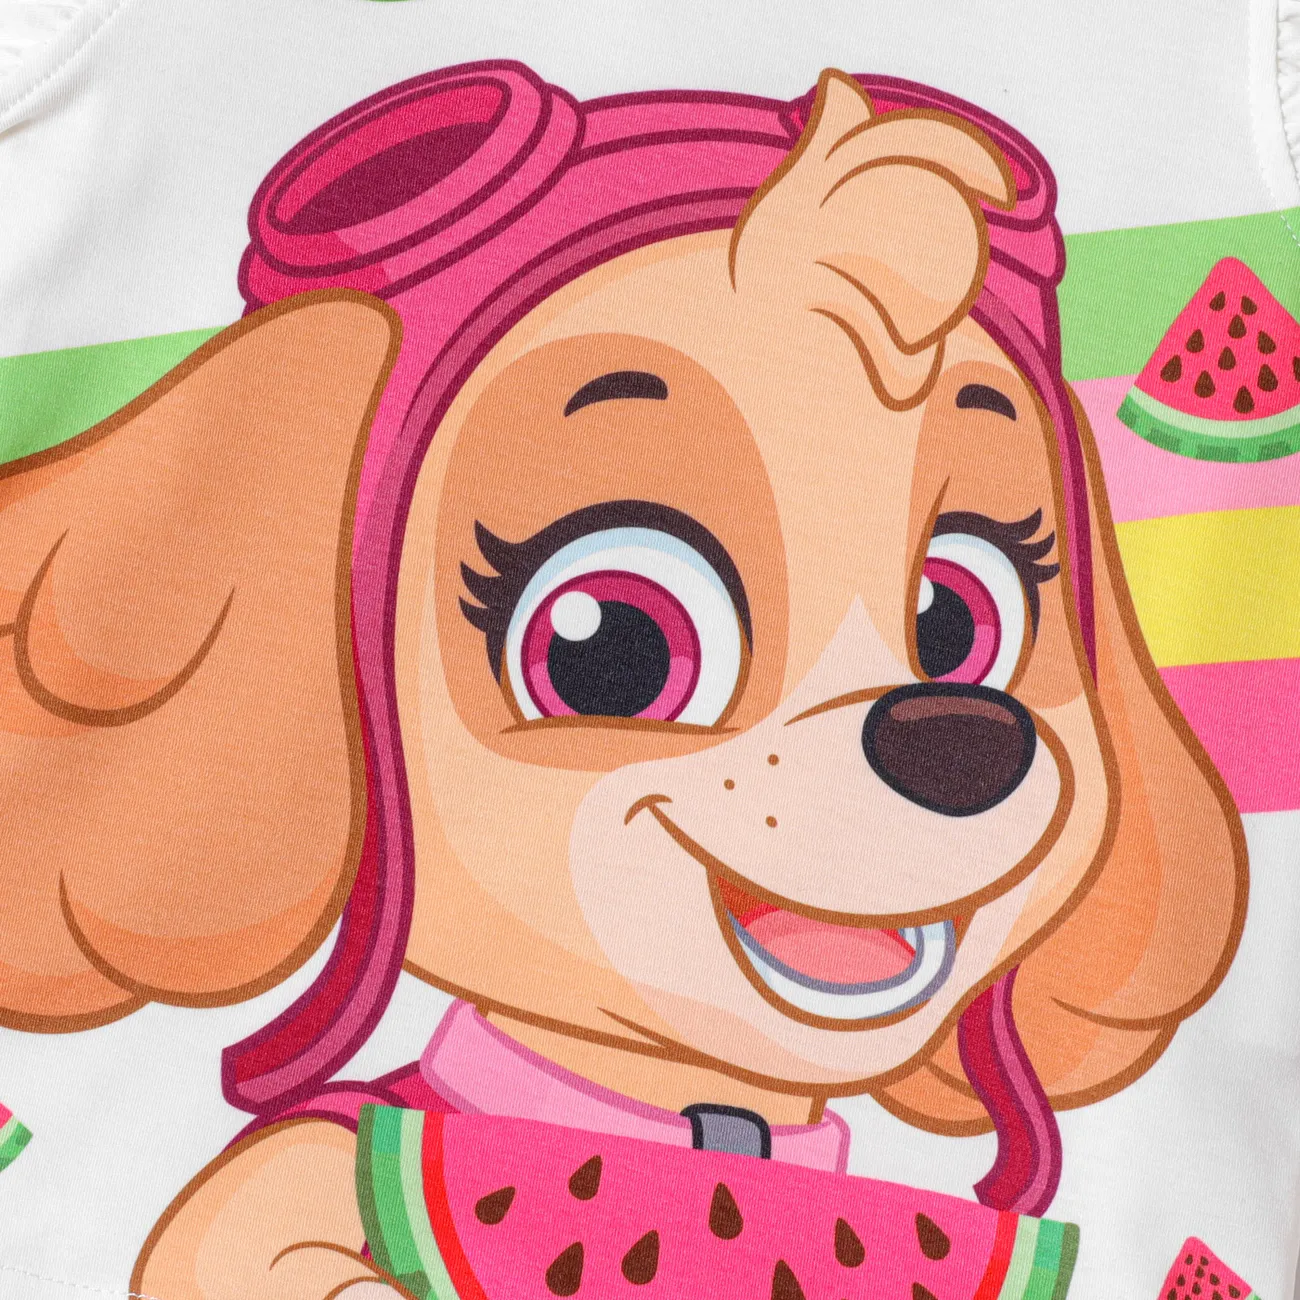 PAW Patrol Toddler Girl 2pcs Naia™ Character Print Flutter-sleeve Top and Watermelon Print Skirt Set Pink big image 1